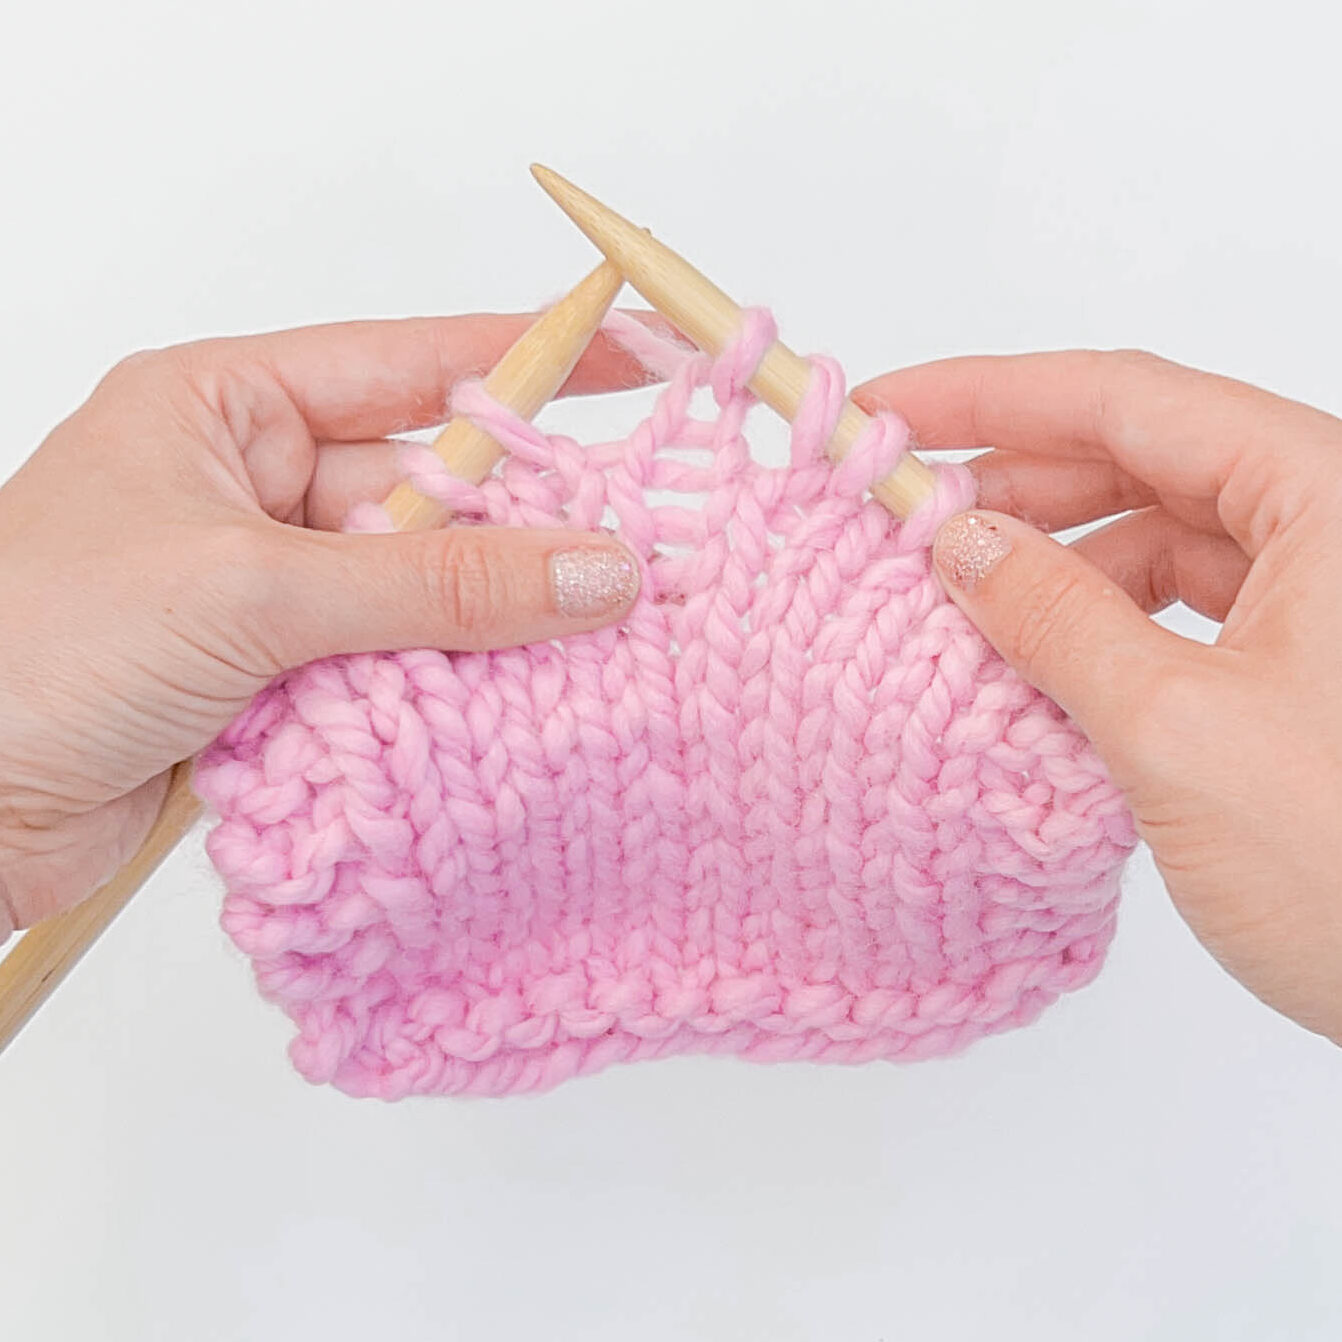 Yarn Over on a knit row - Step 3